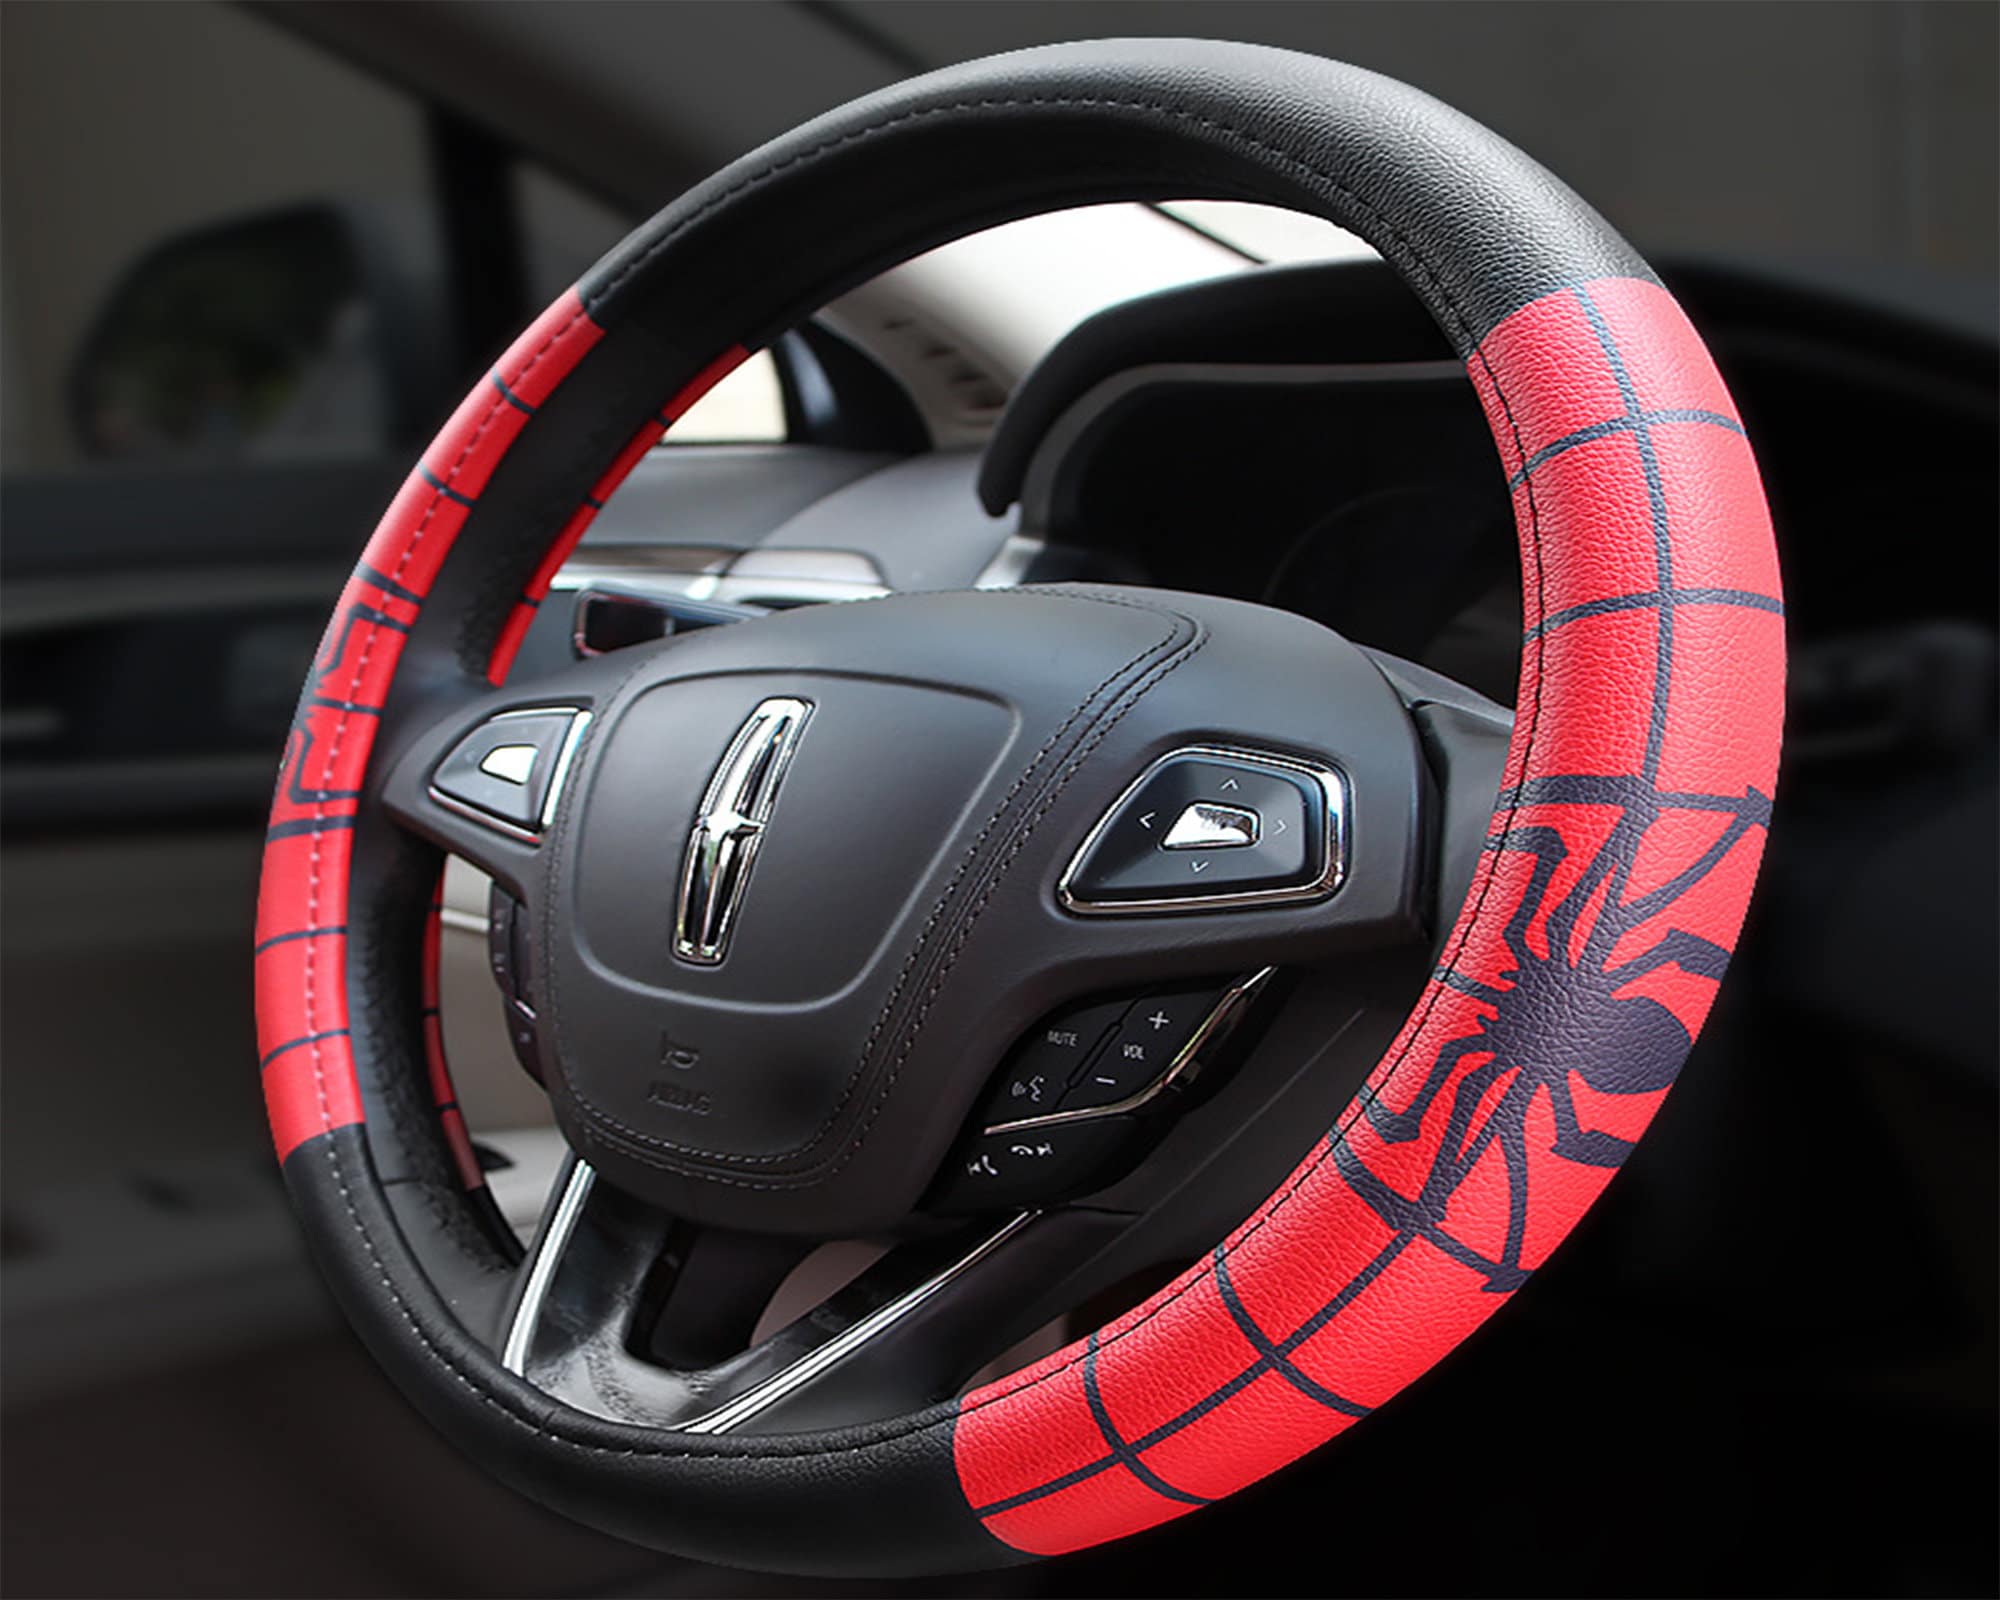 Spider-Man Steering wheel cover